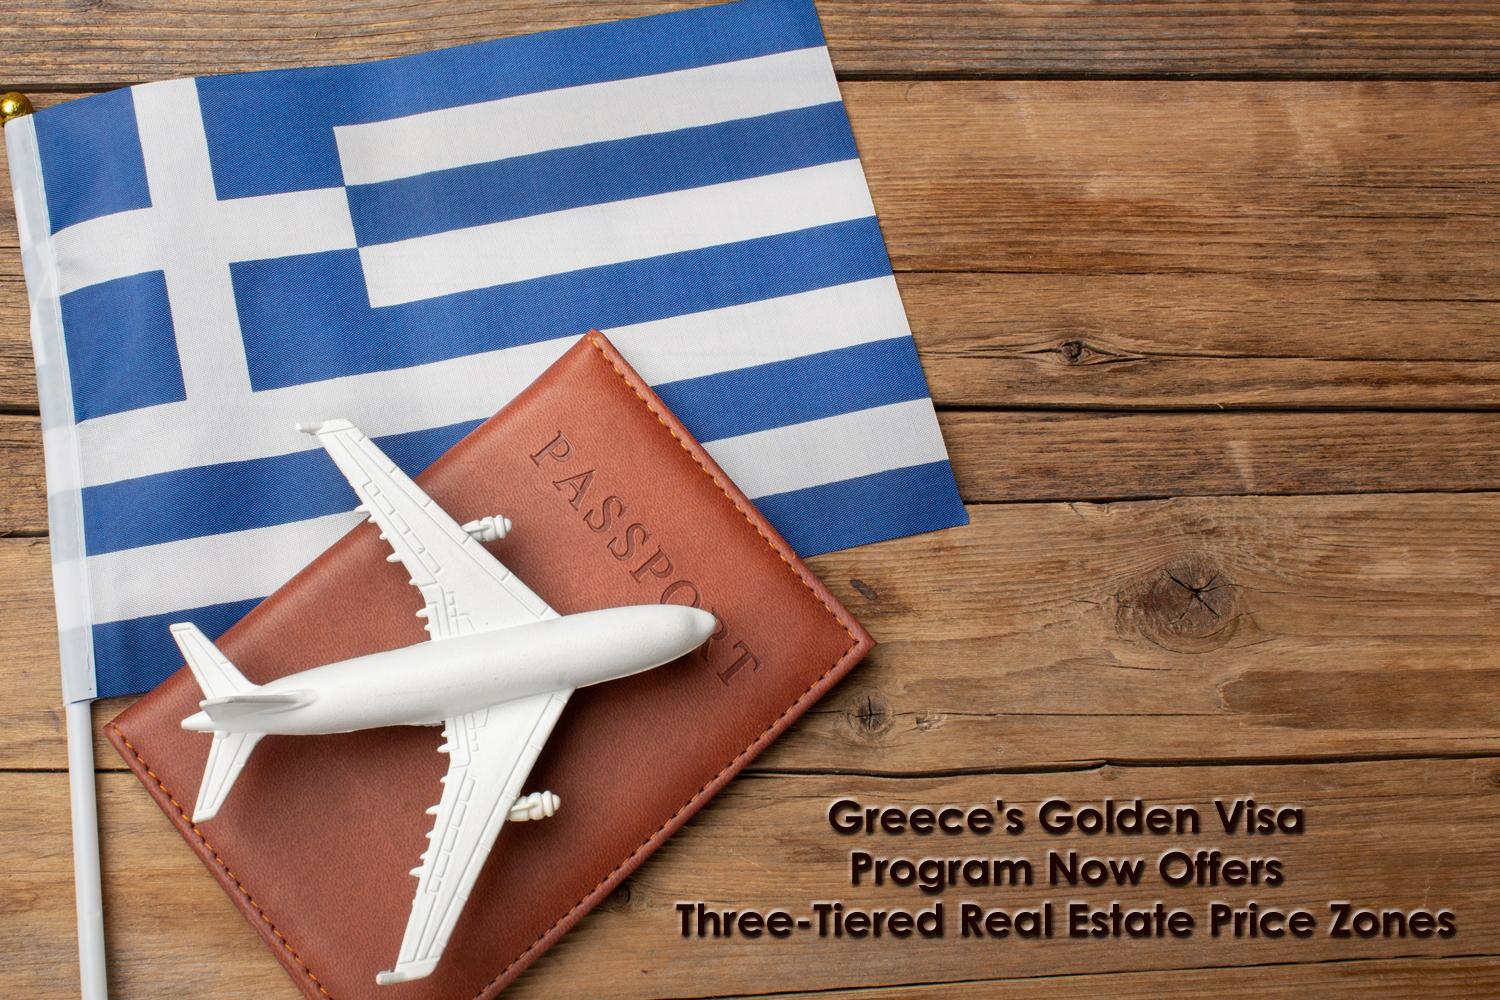 Greece's Golden Visa Program Now Offers Three-Tiered Real Estate Price Zones.